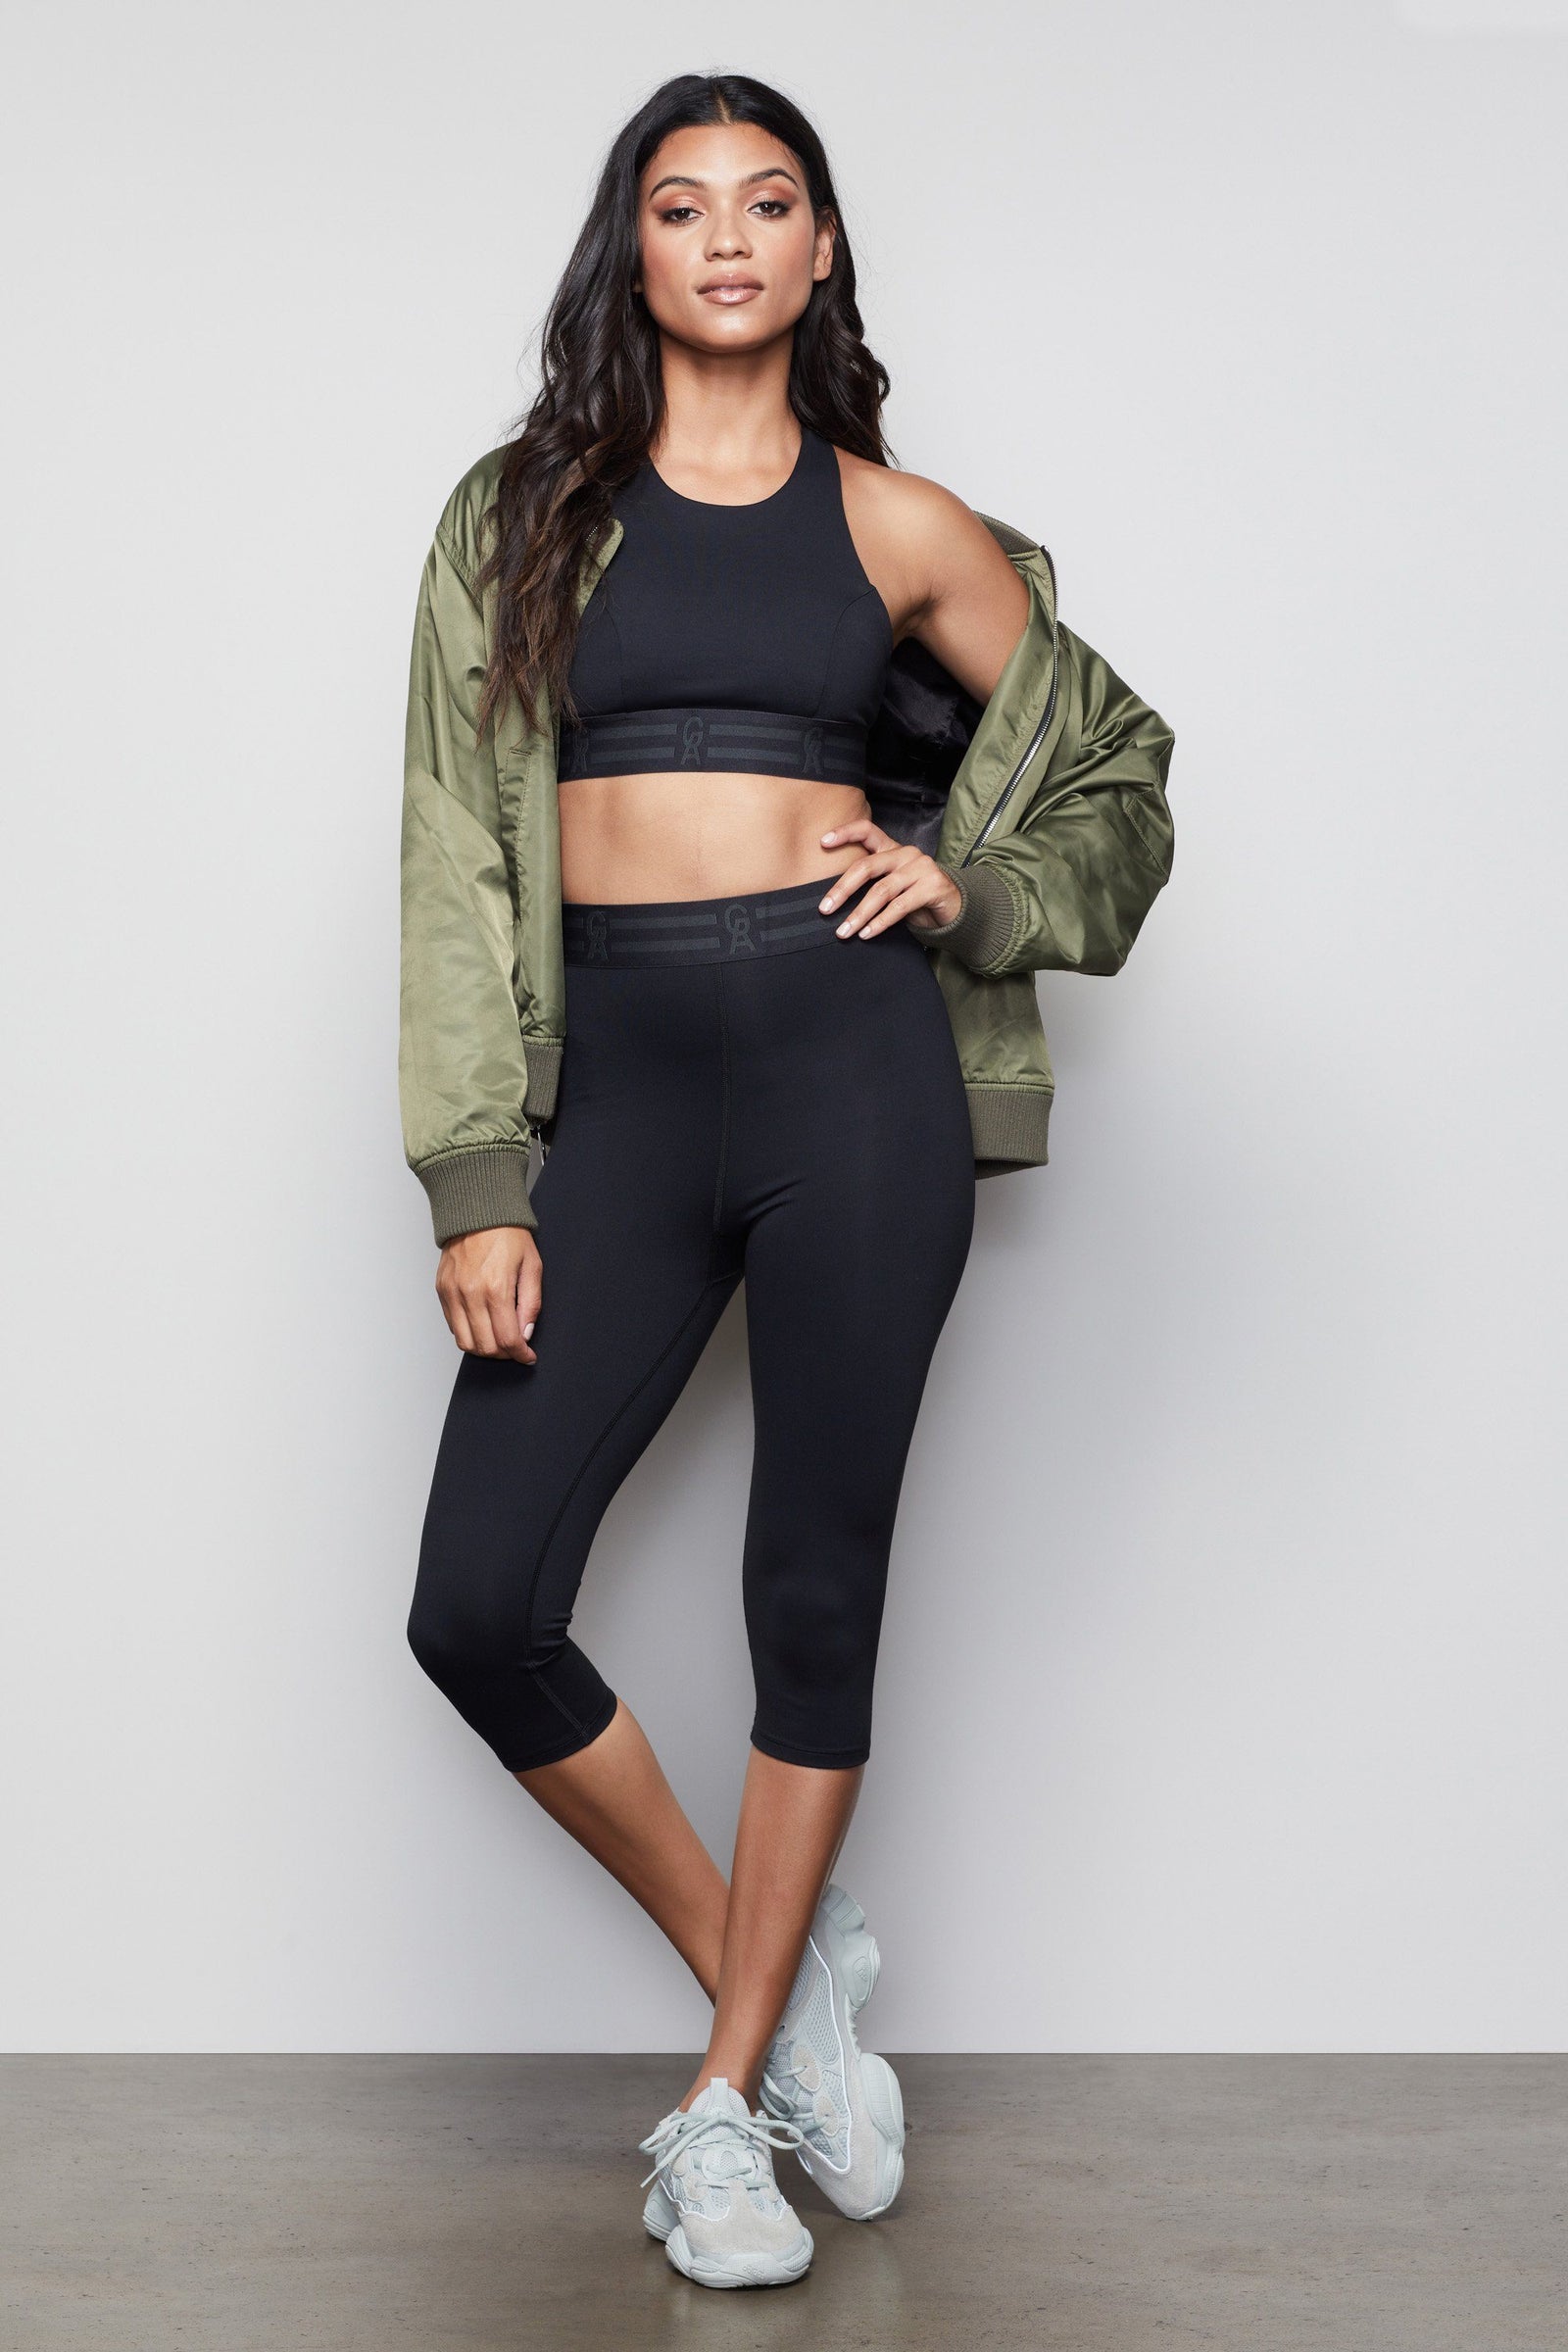 Amazon.com : FULLSOFT 3 Pack Capri Leggings for Women - High Waisted Tummy  Control Black Workout Yoga Pants for Summer,Sports (1-3 Pack Capri Black, Black,Black,Small-Medium) : Clothing, Shoes & Jewelry